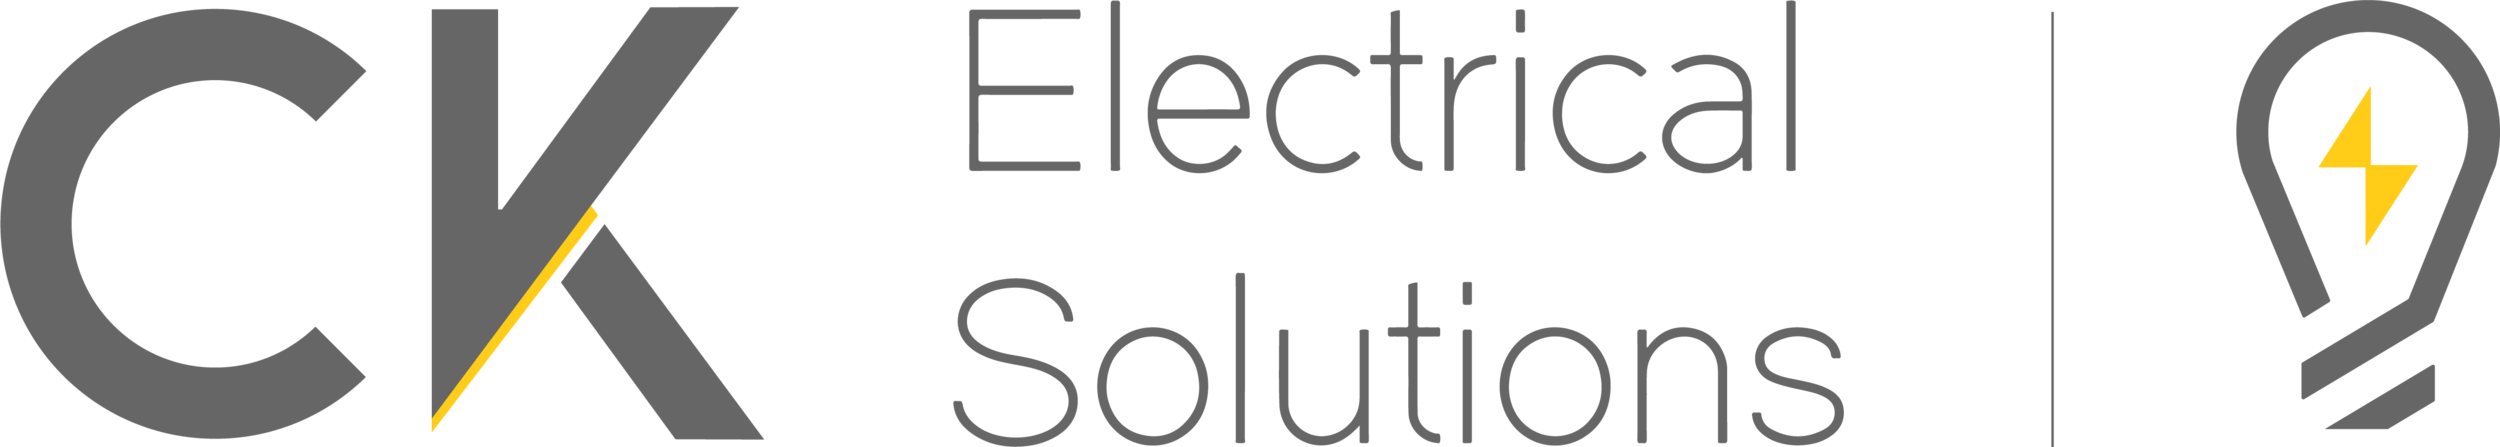 CK Electrical Solutions Ltd